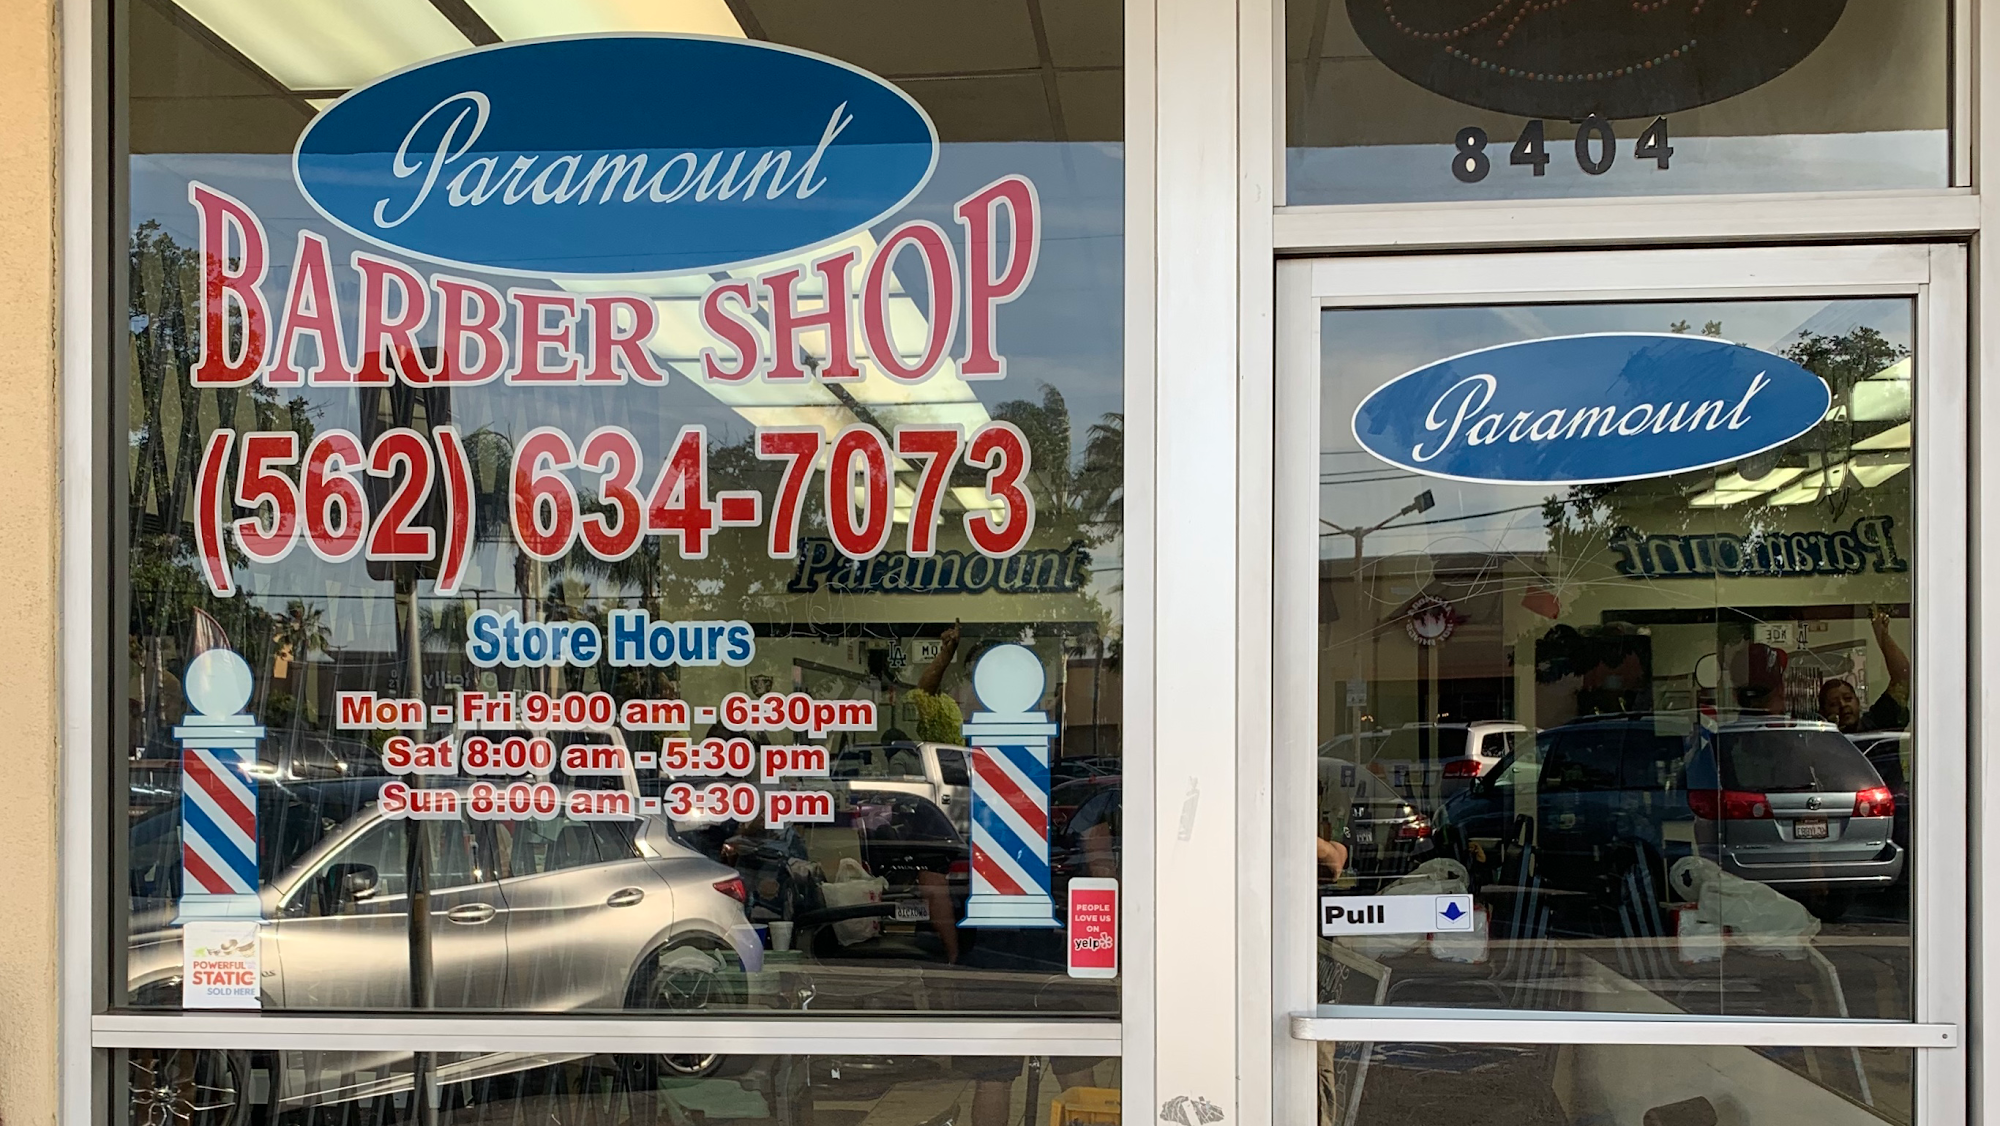 Paramount Barber Shop